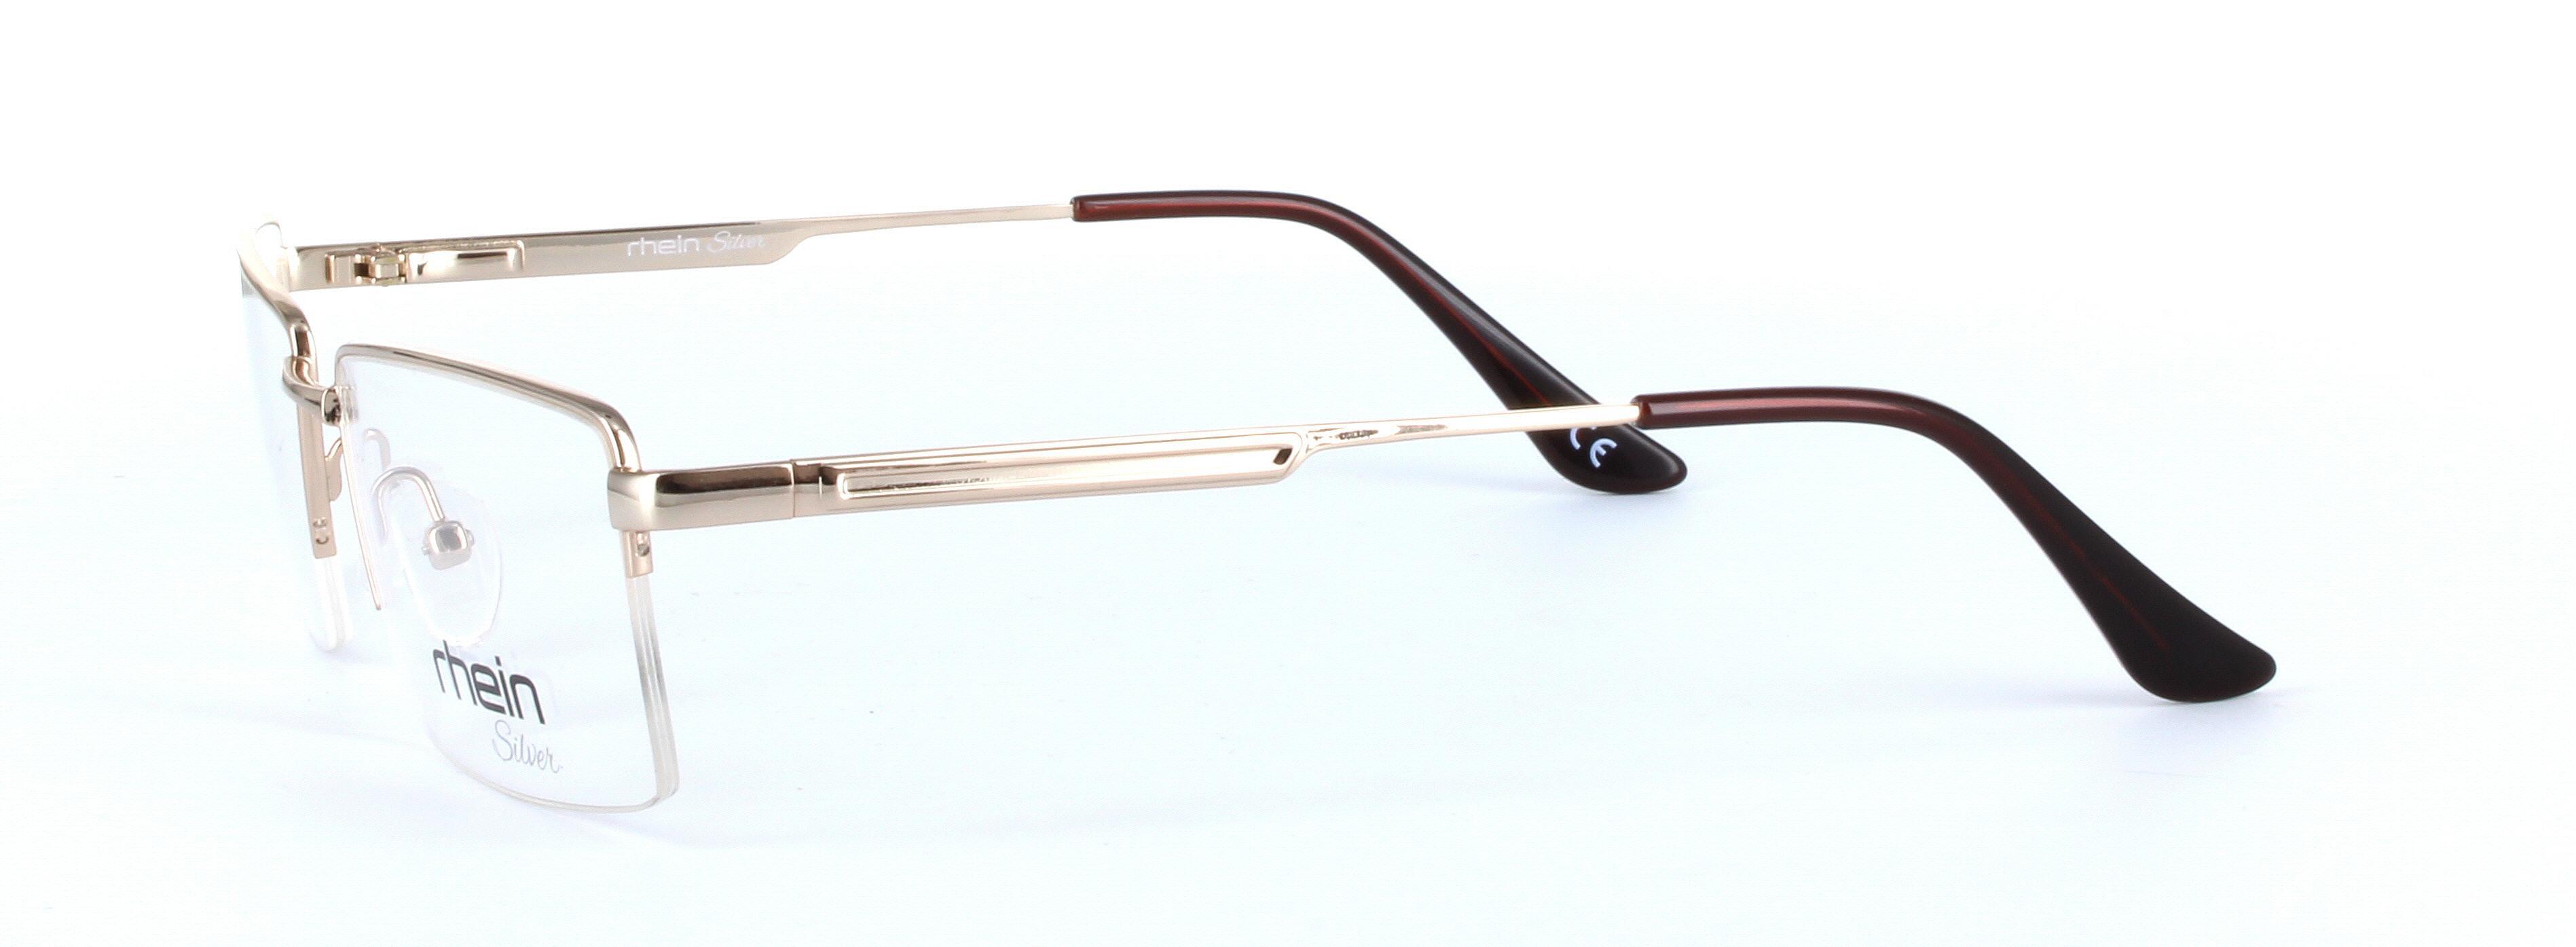 Highfield Gold Semi Rimless Rectangular Metal Glasses - Image View 2